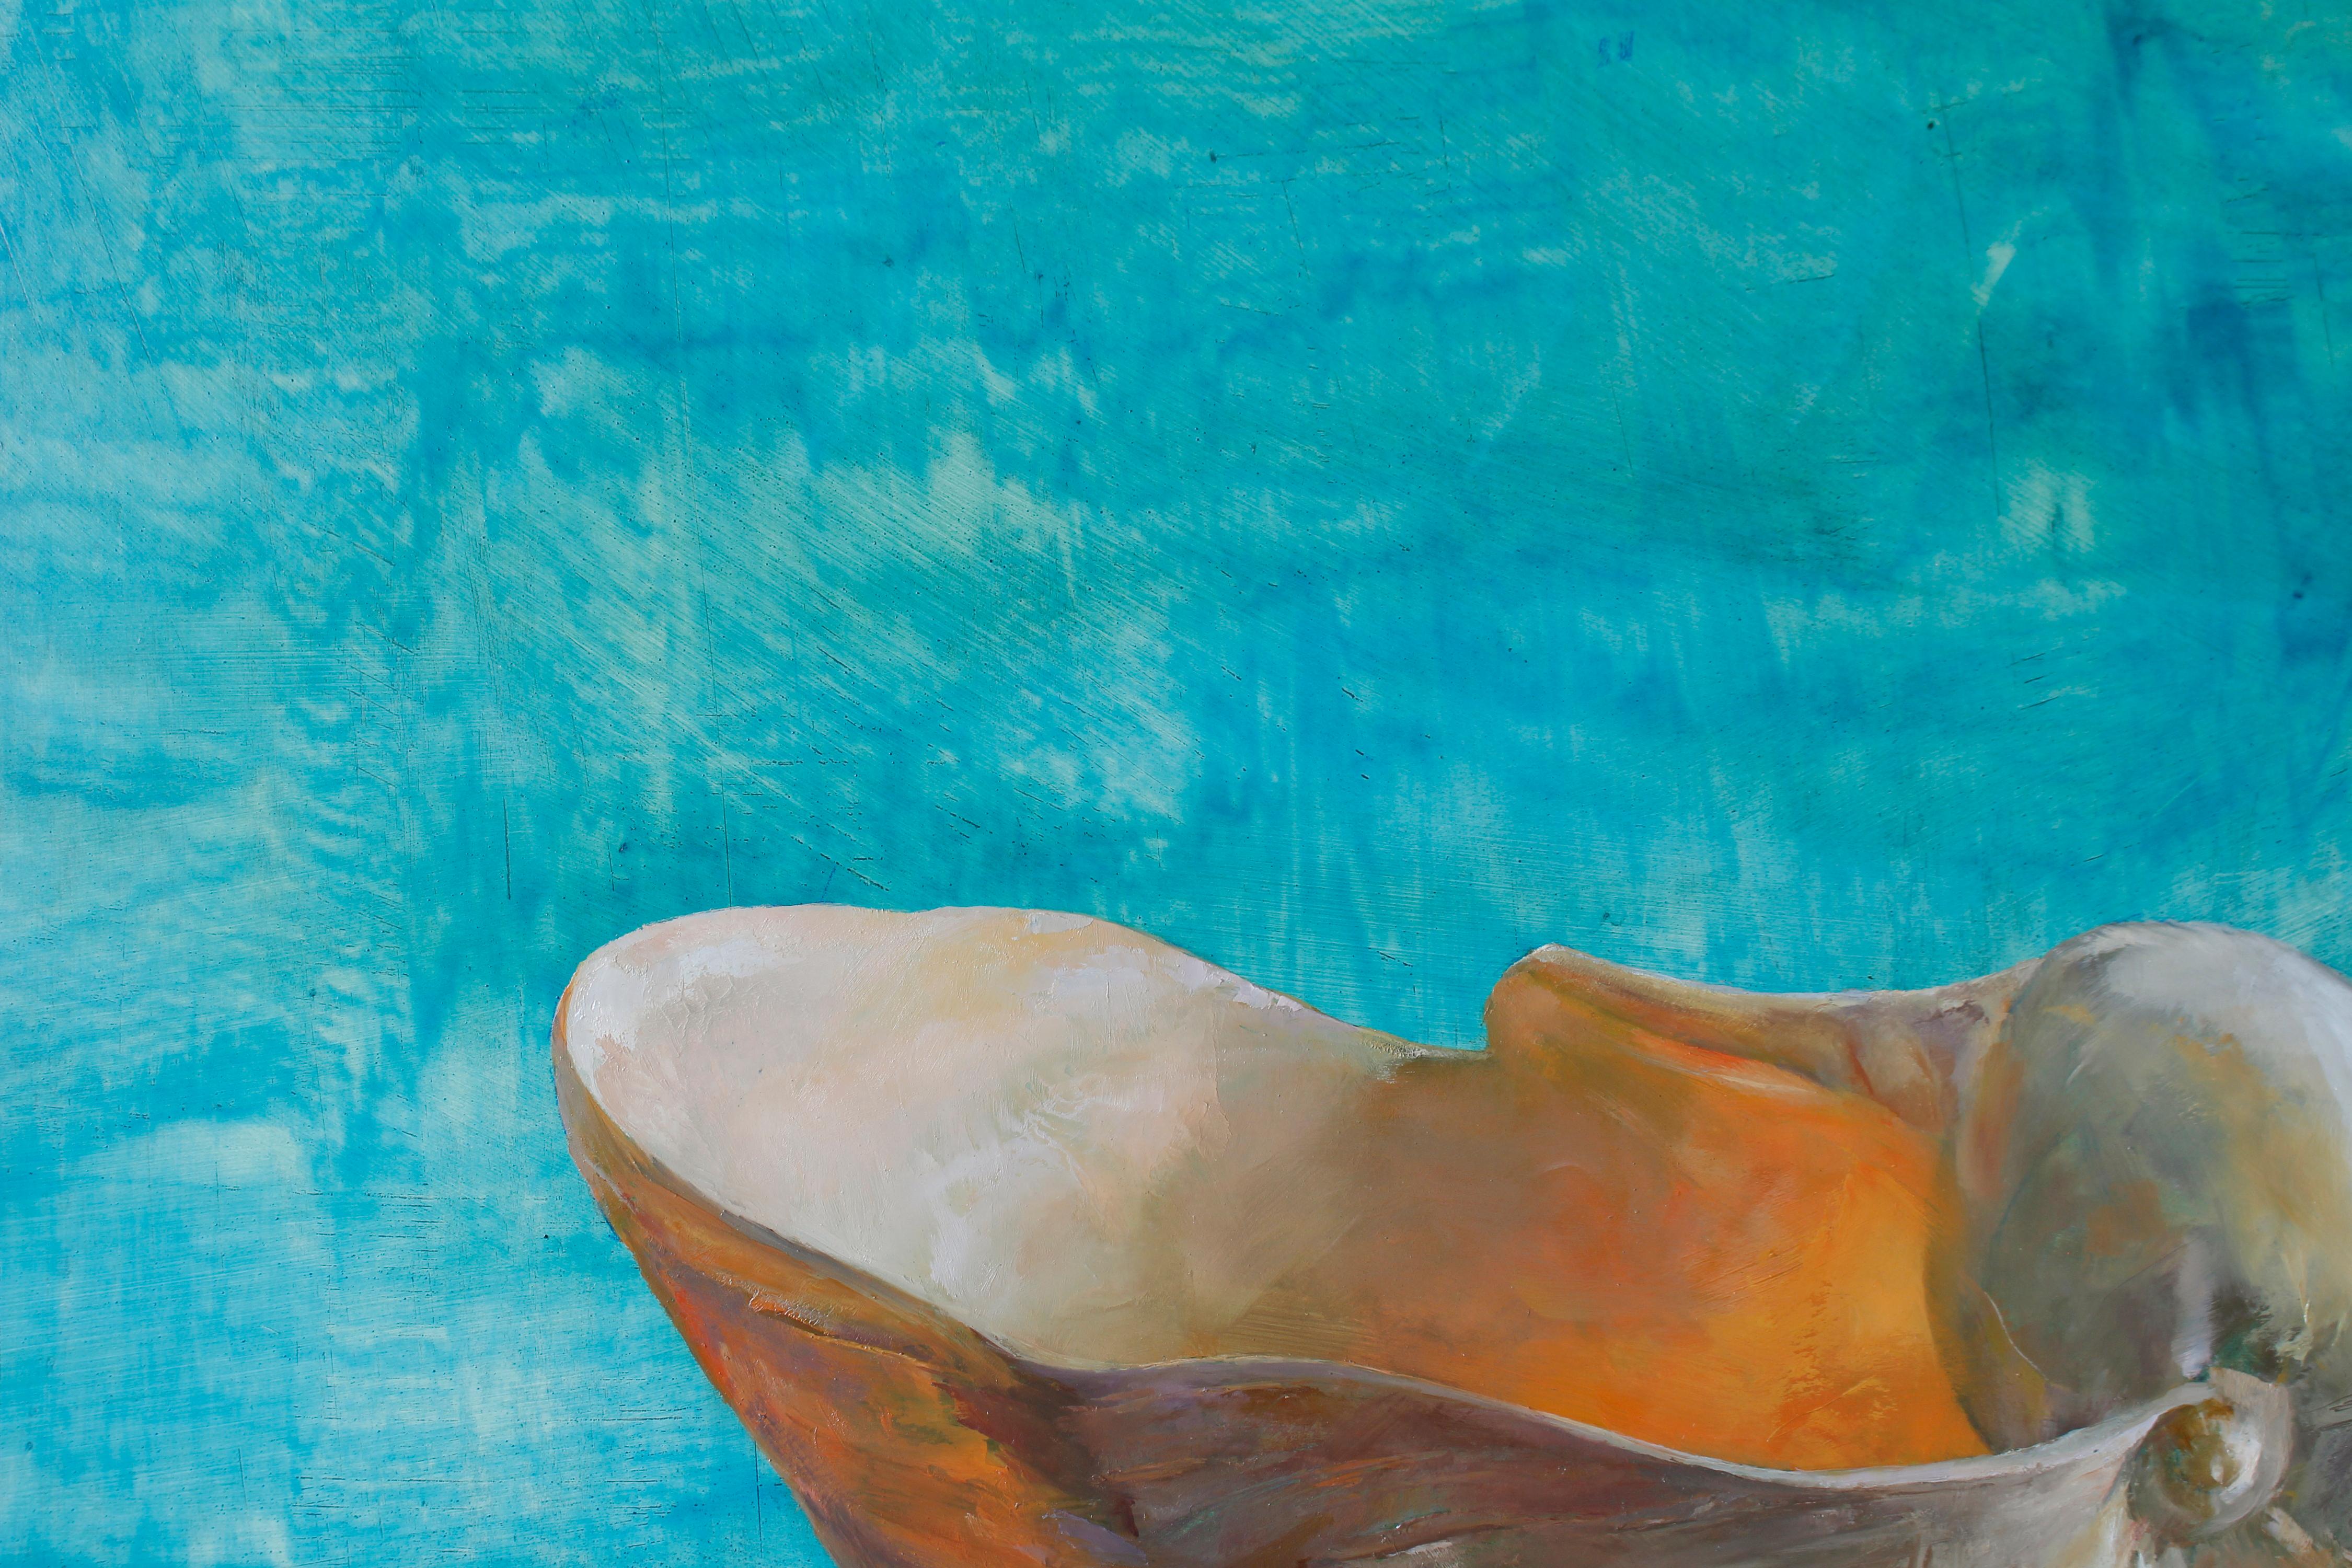 Aqua Bailer Shell - Table Bailer simple coquillage de mer Bailer sur table marron avec fond écaillé - Réalisme Painting par Helen Oh